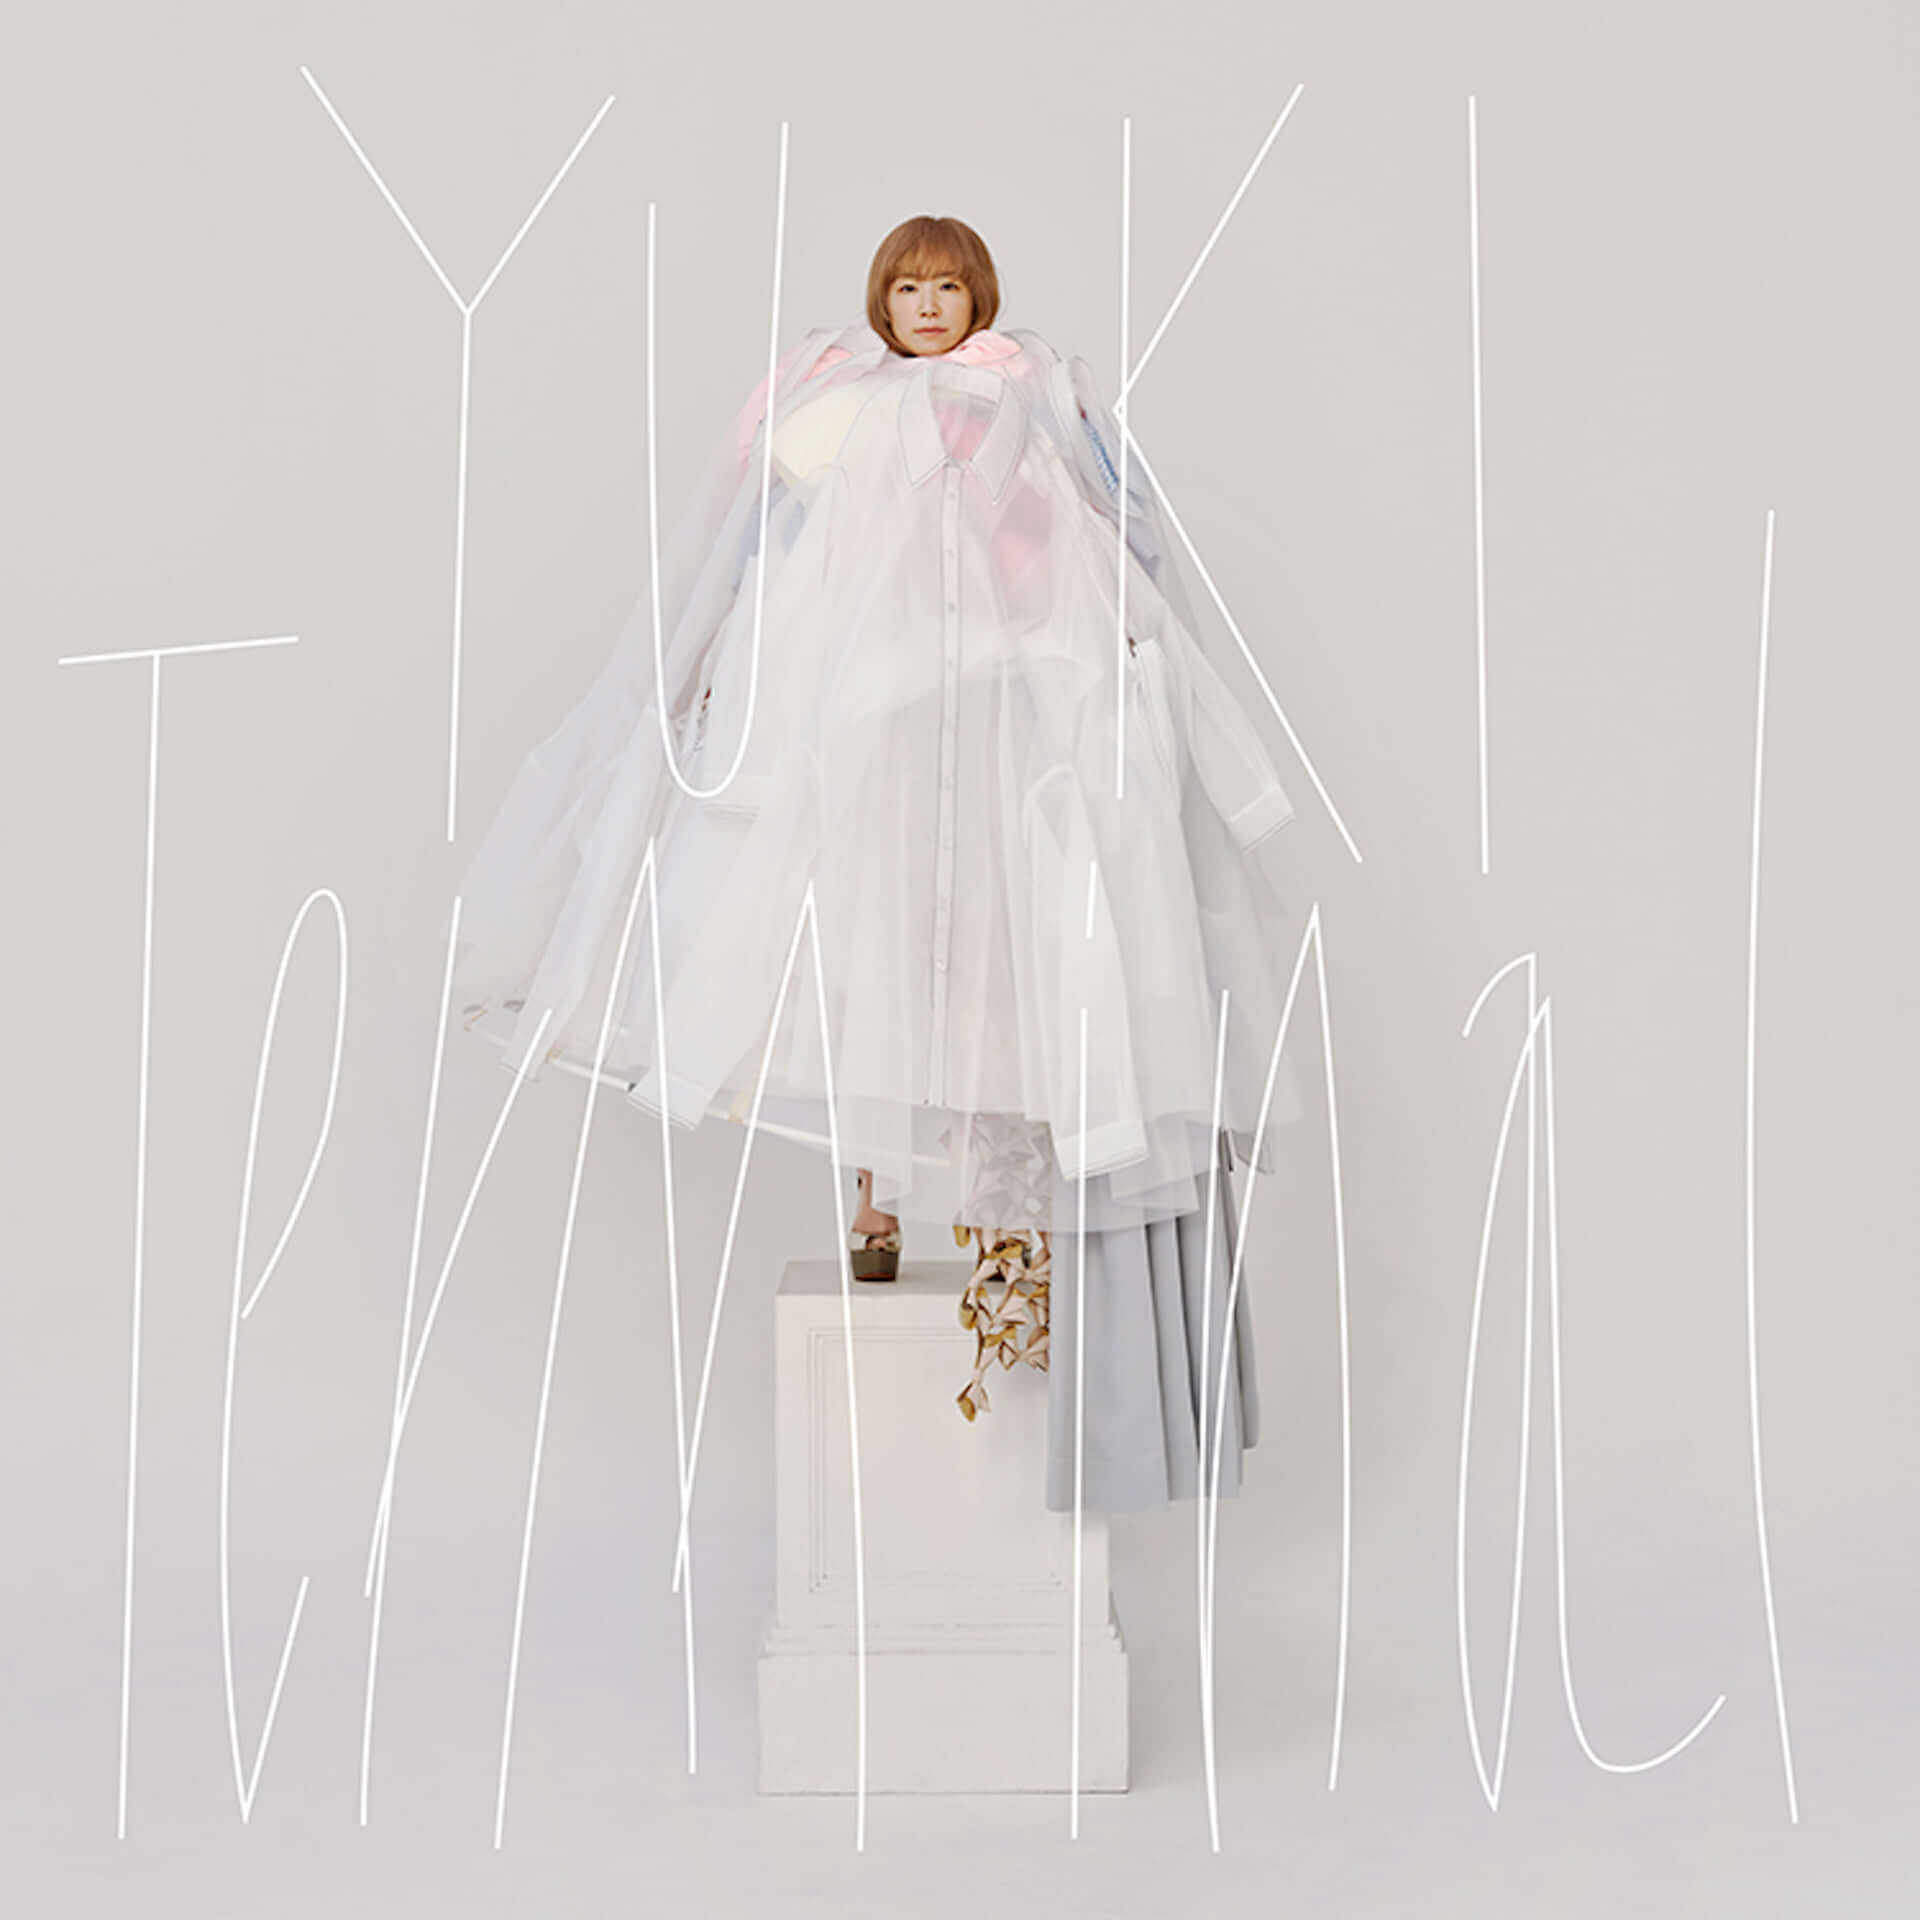 YUKI最新アルバム『Terminal』のジャケット写真＆収録曲が公開！初回盤DVDには新曲“Baby, it’s you”MVも収録 music210326_yuki_3-1920x1920